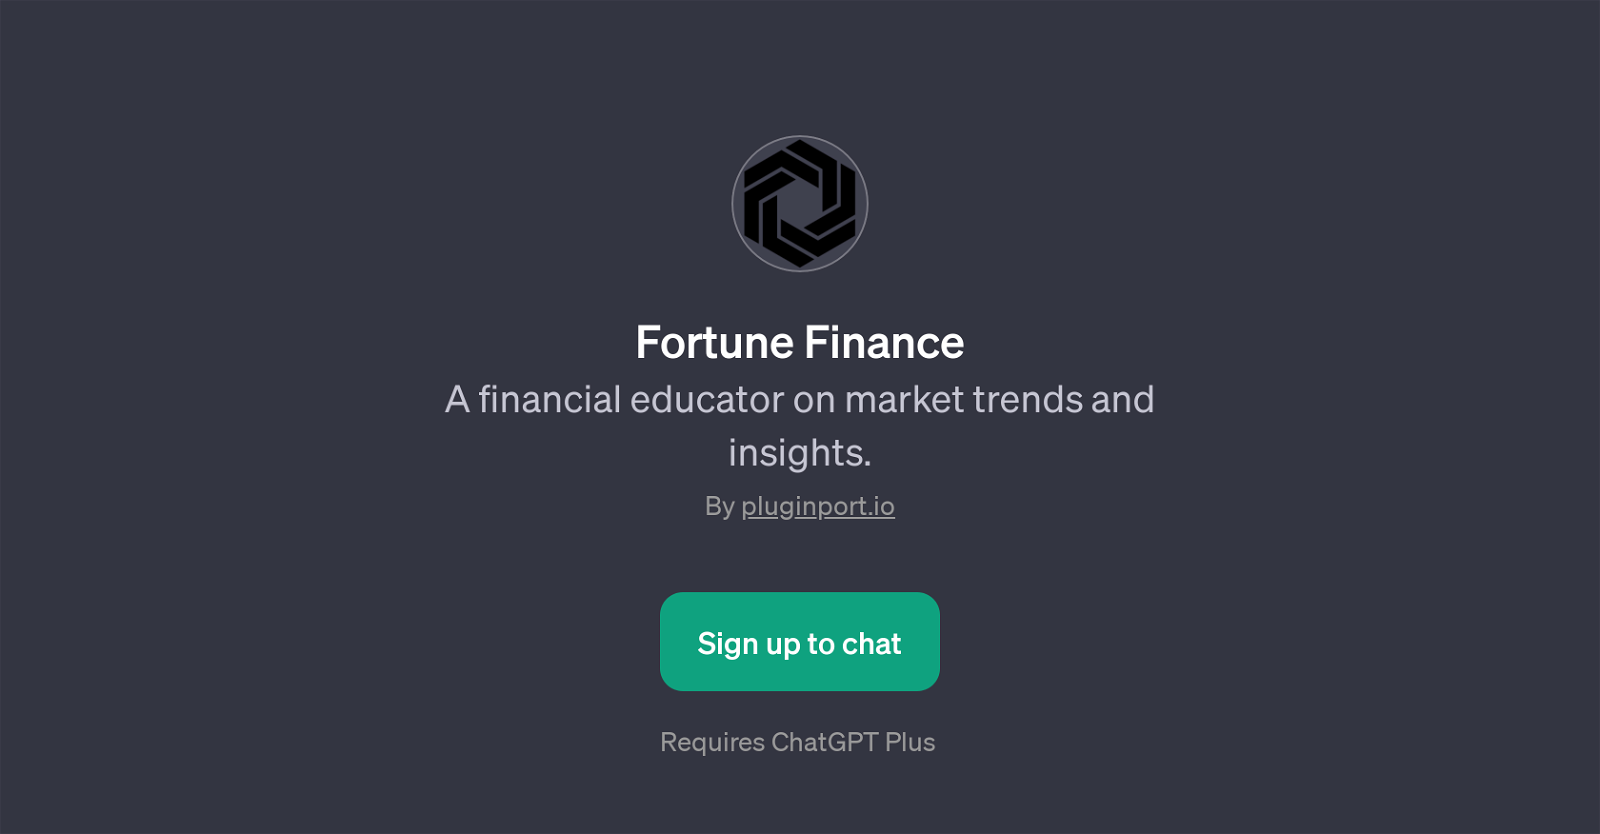 Fortune Finance website